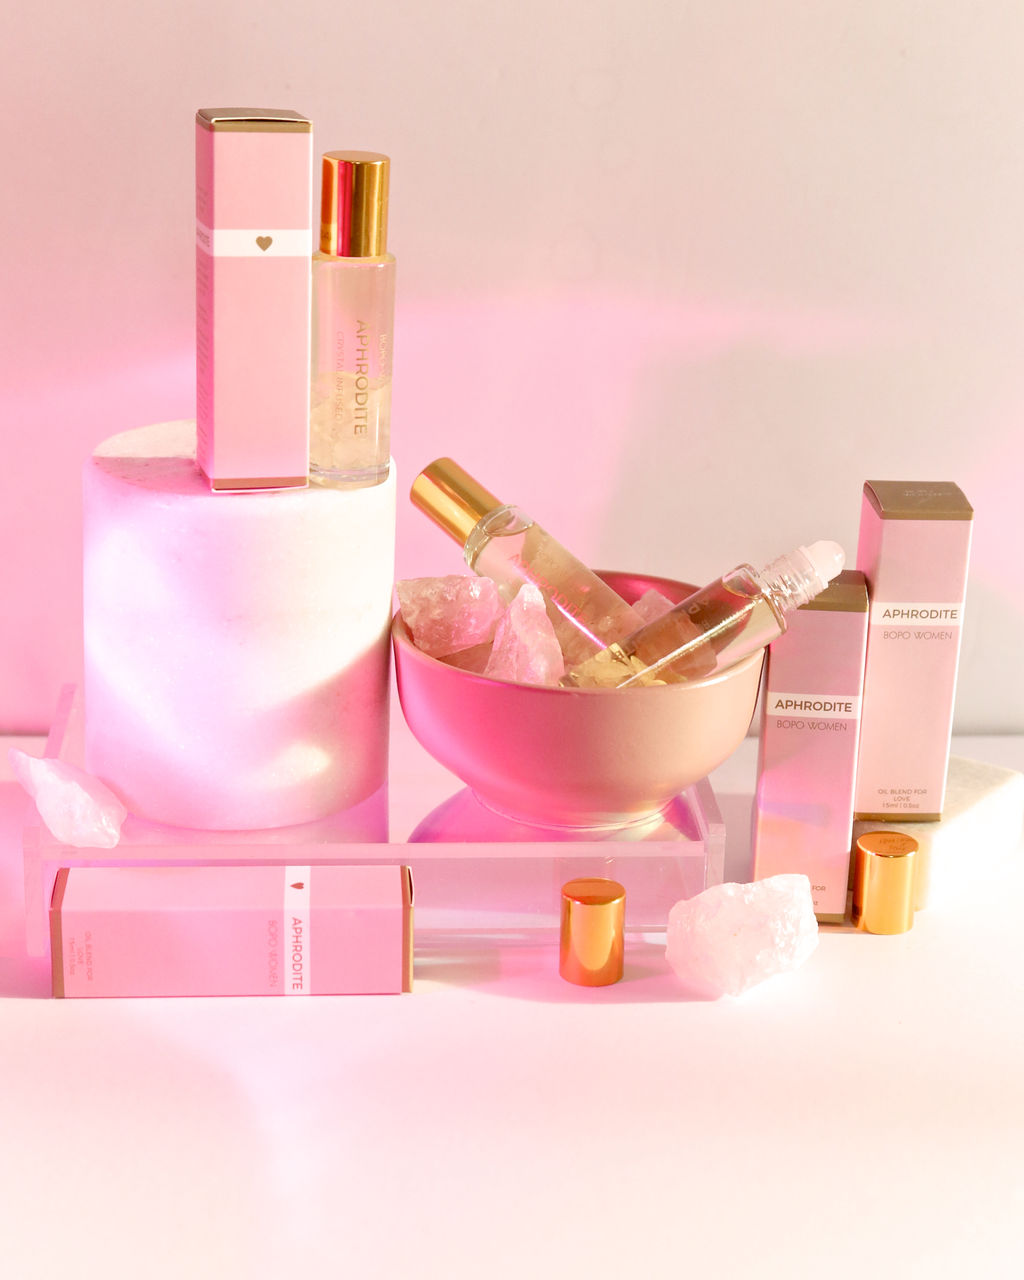 BOPO WOMAN - Aphrodite Perfume Roller | The Ivy plant Studio | Bopo women | perfume roller | 